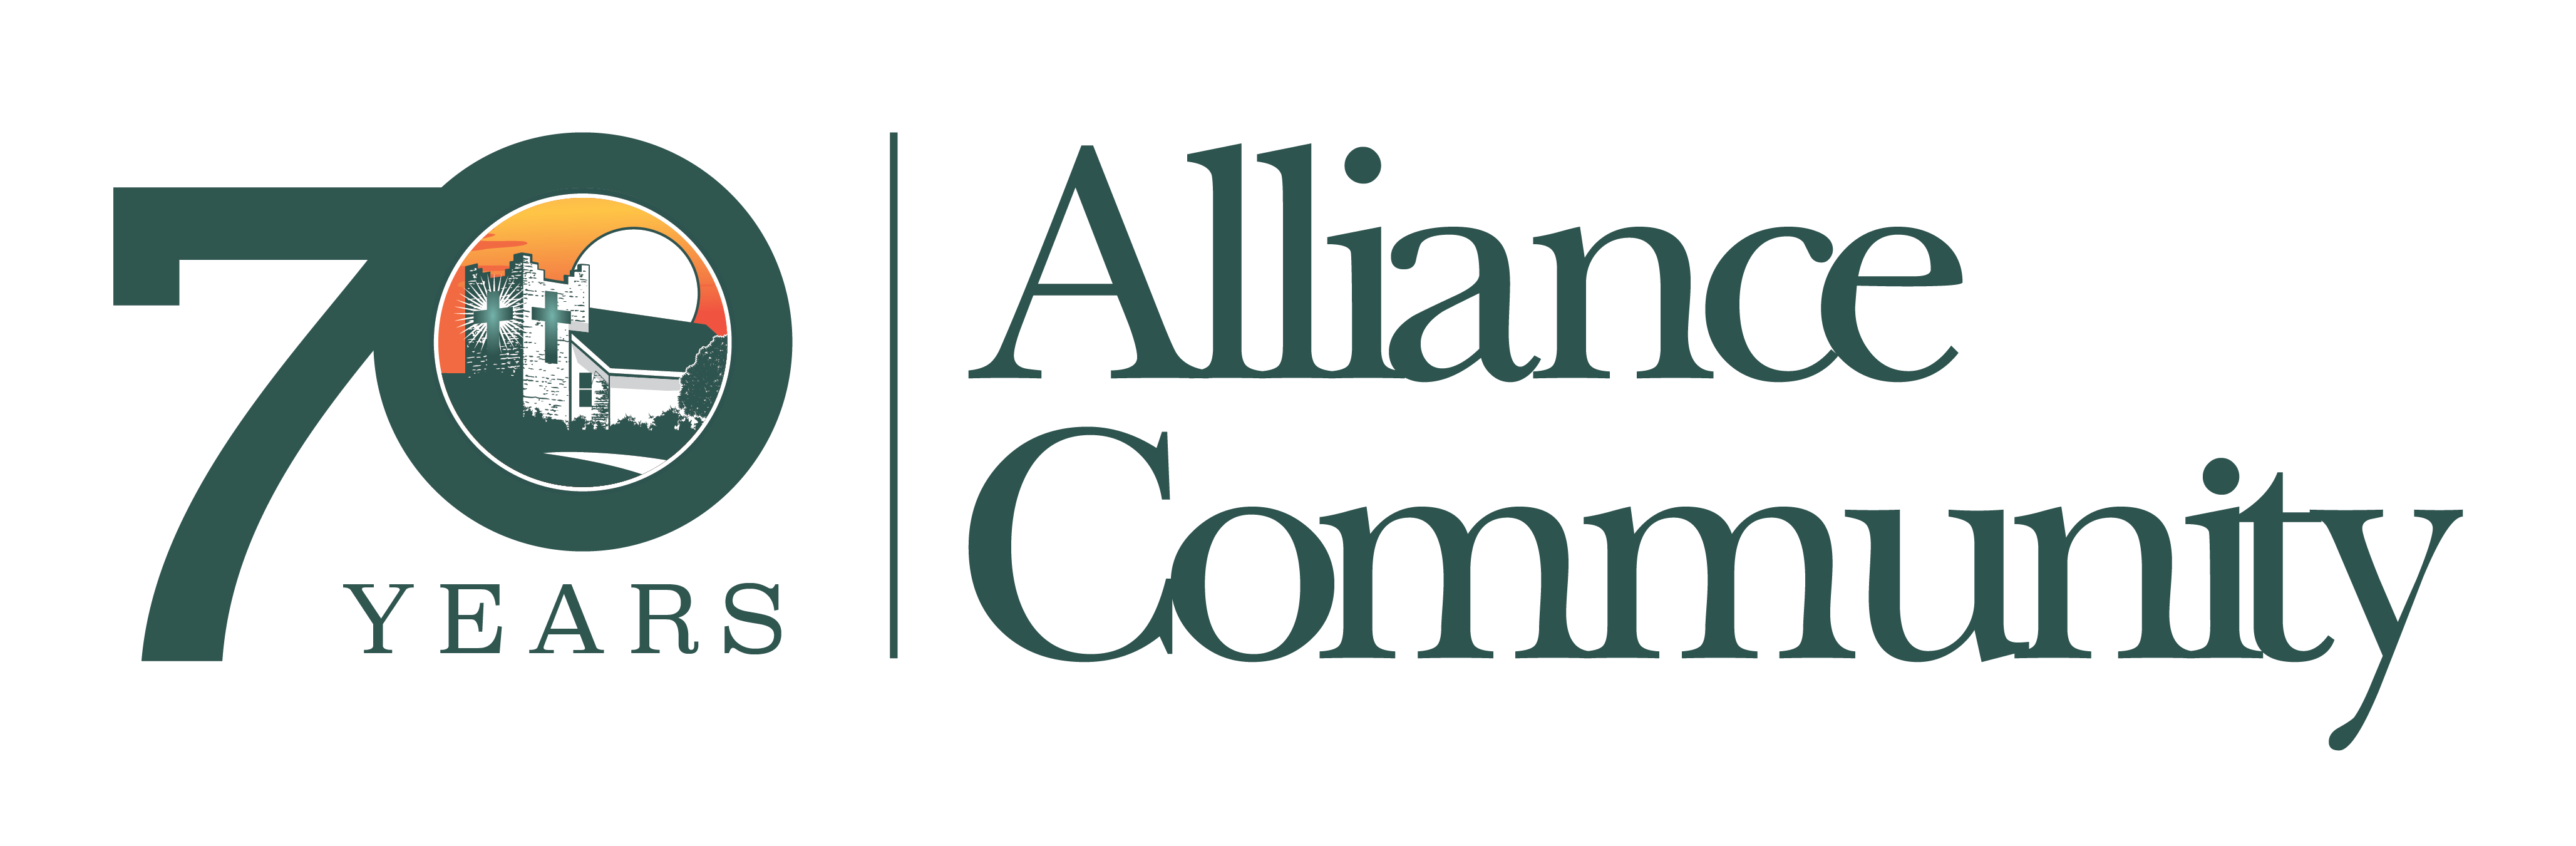 Alliance-Community - 70 Years 